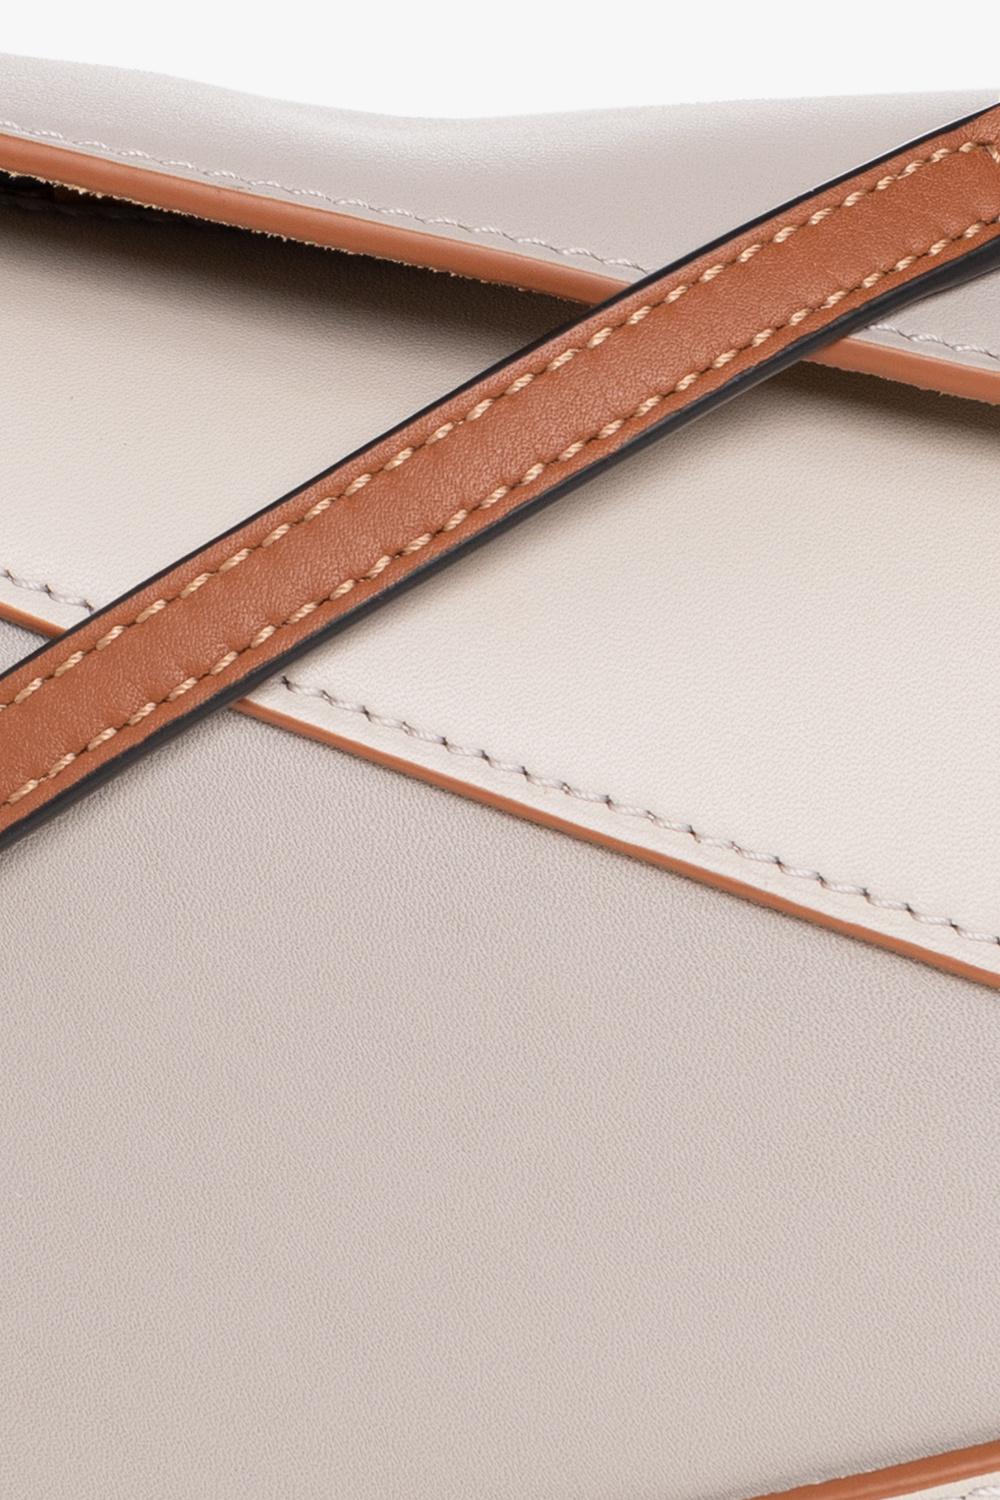 Loewe X Paula's Puzzle Mini Leather Shoulder Bag in Pink